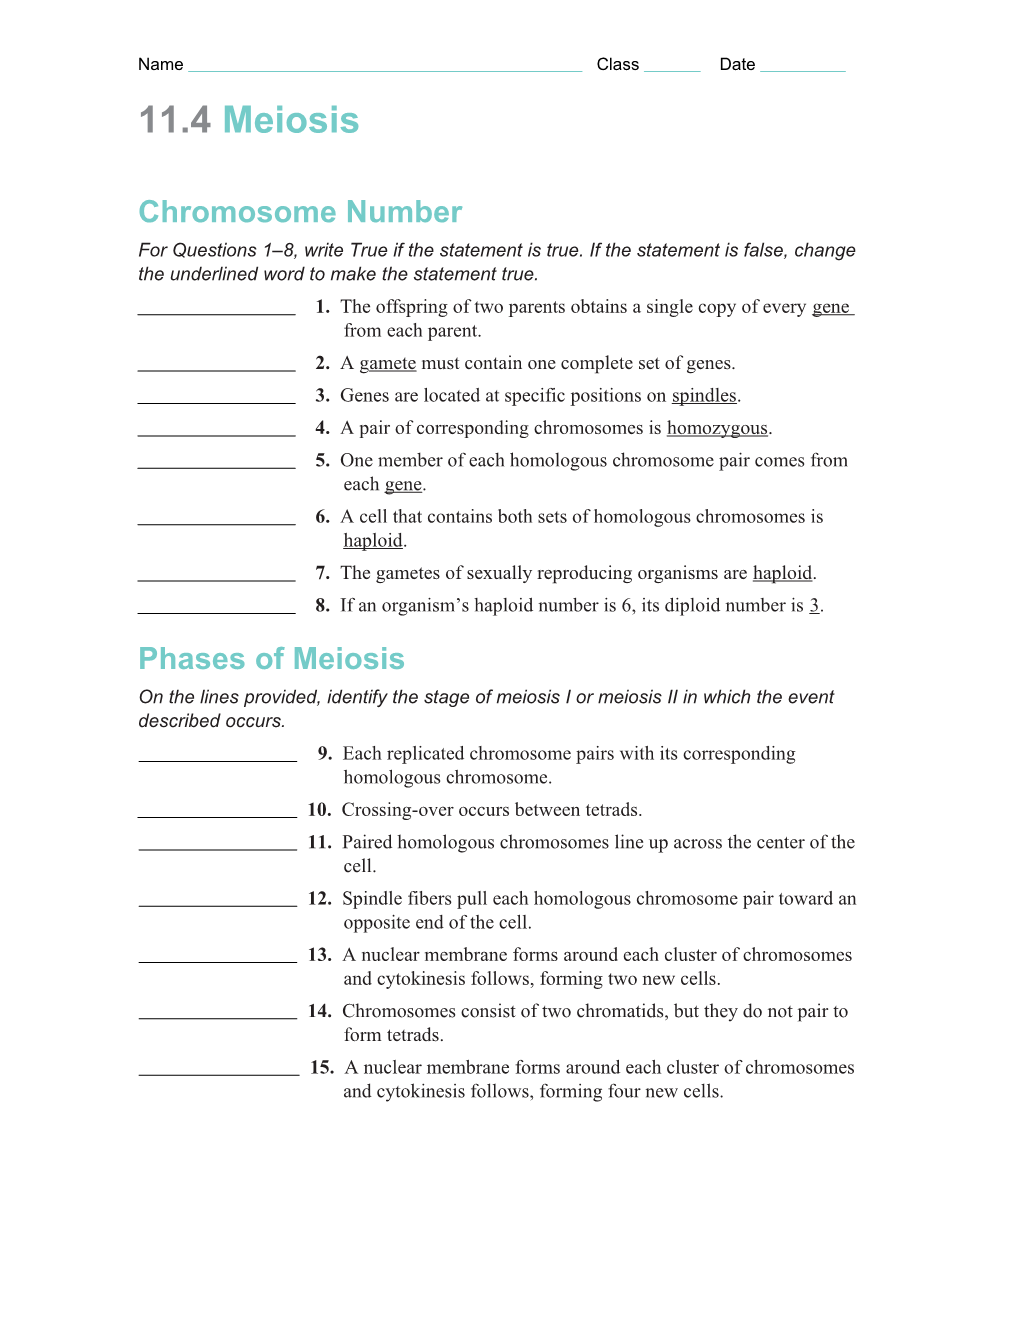 Chromosome Number